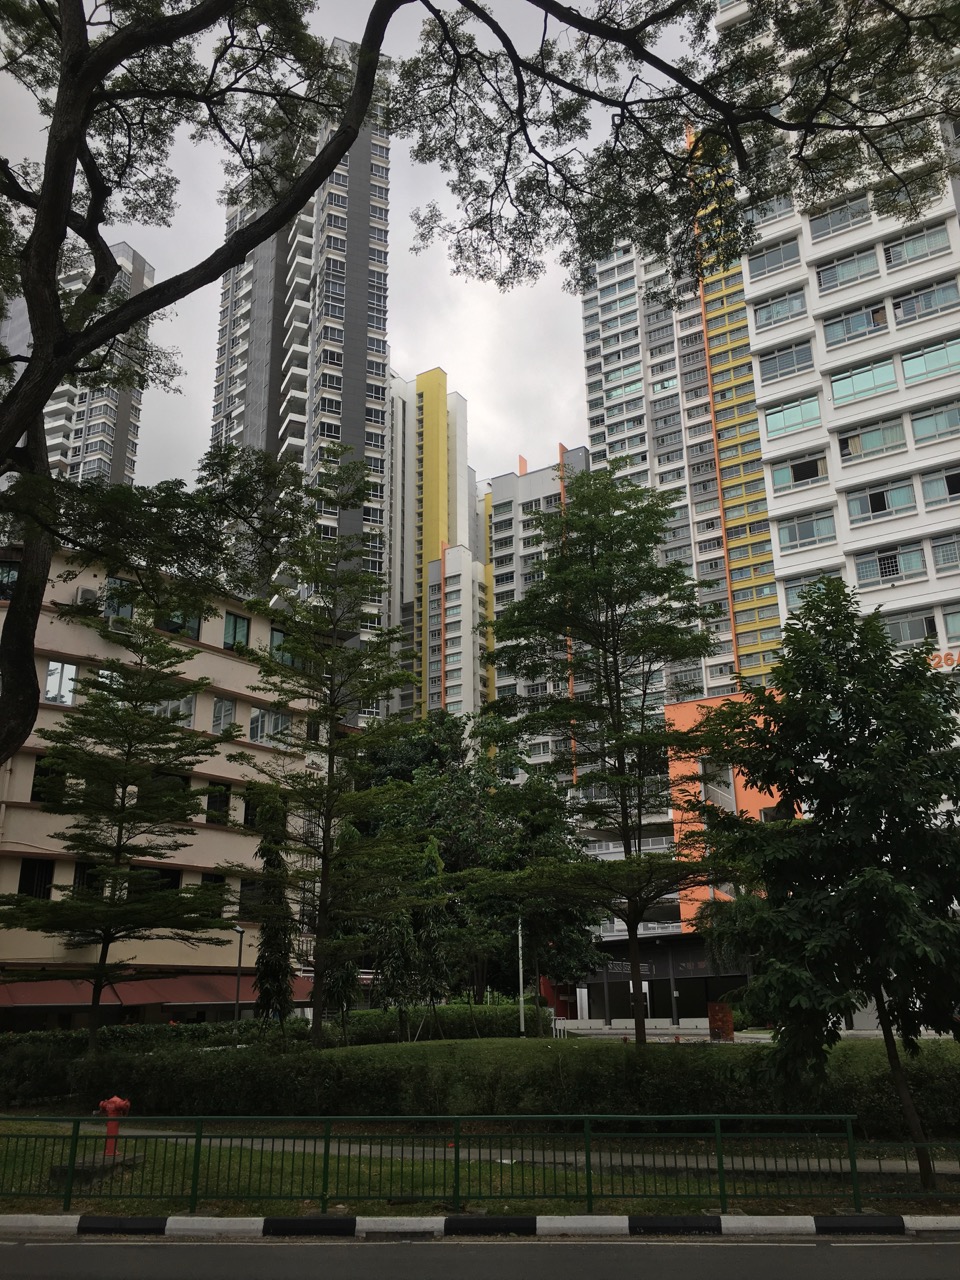  Tiong Bahru neighborhood, Singapore 